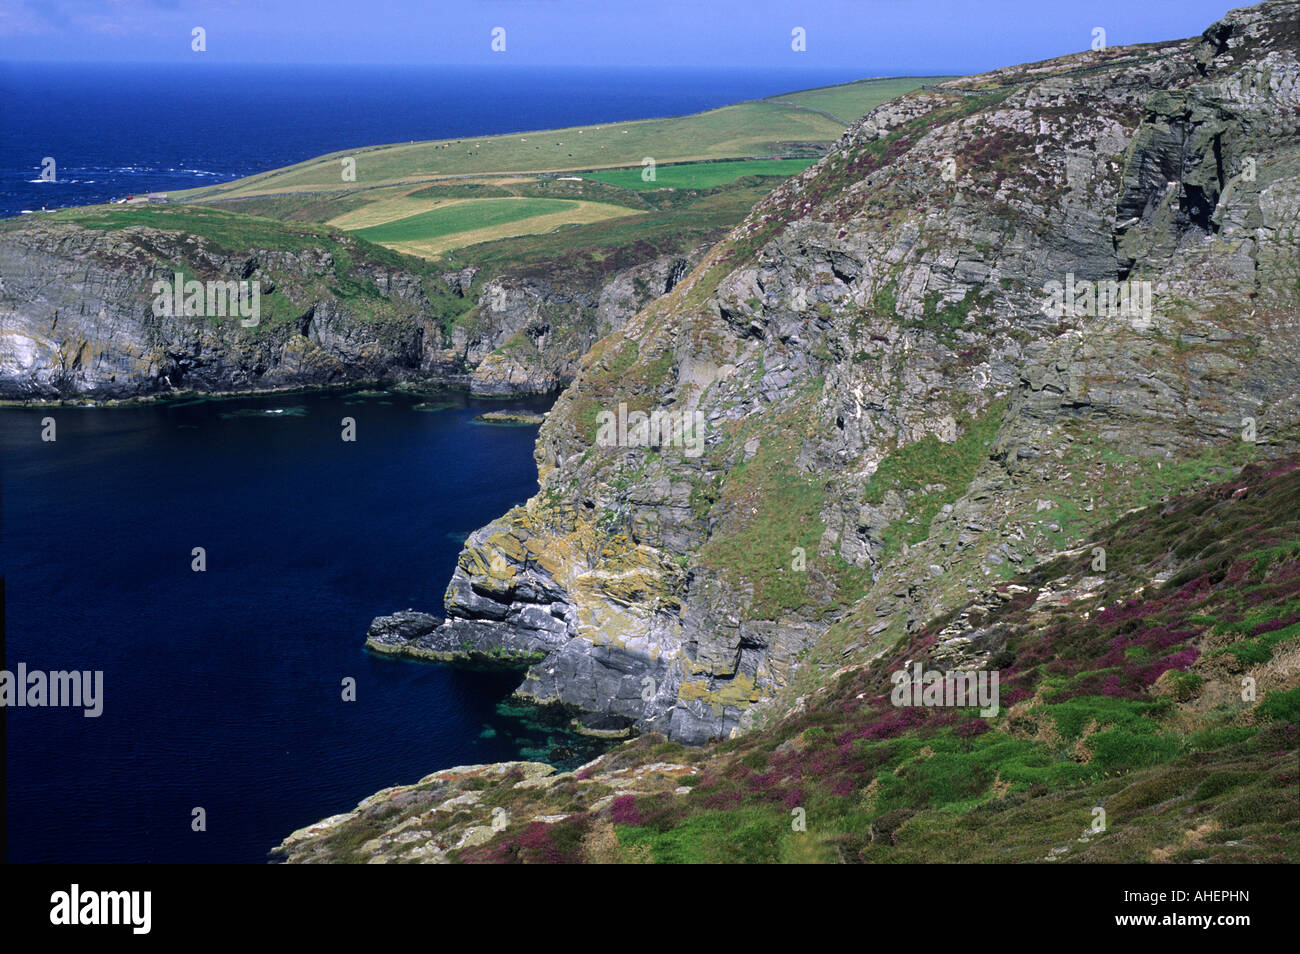 Spanish Head Isle of Man UK coast coastal scenery Stock Photo